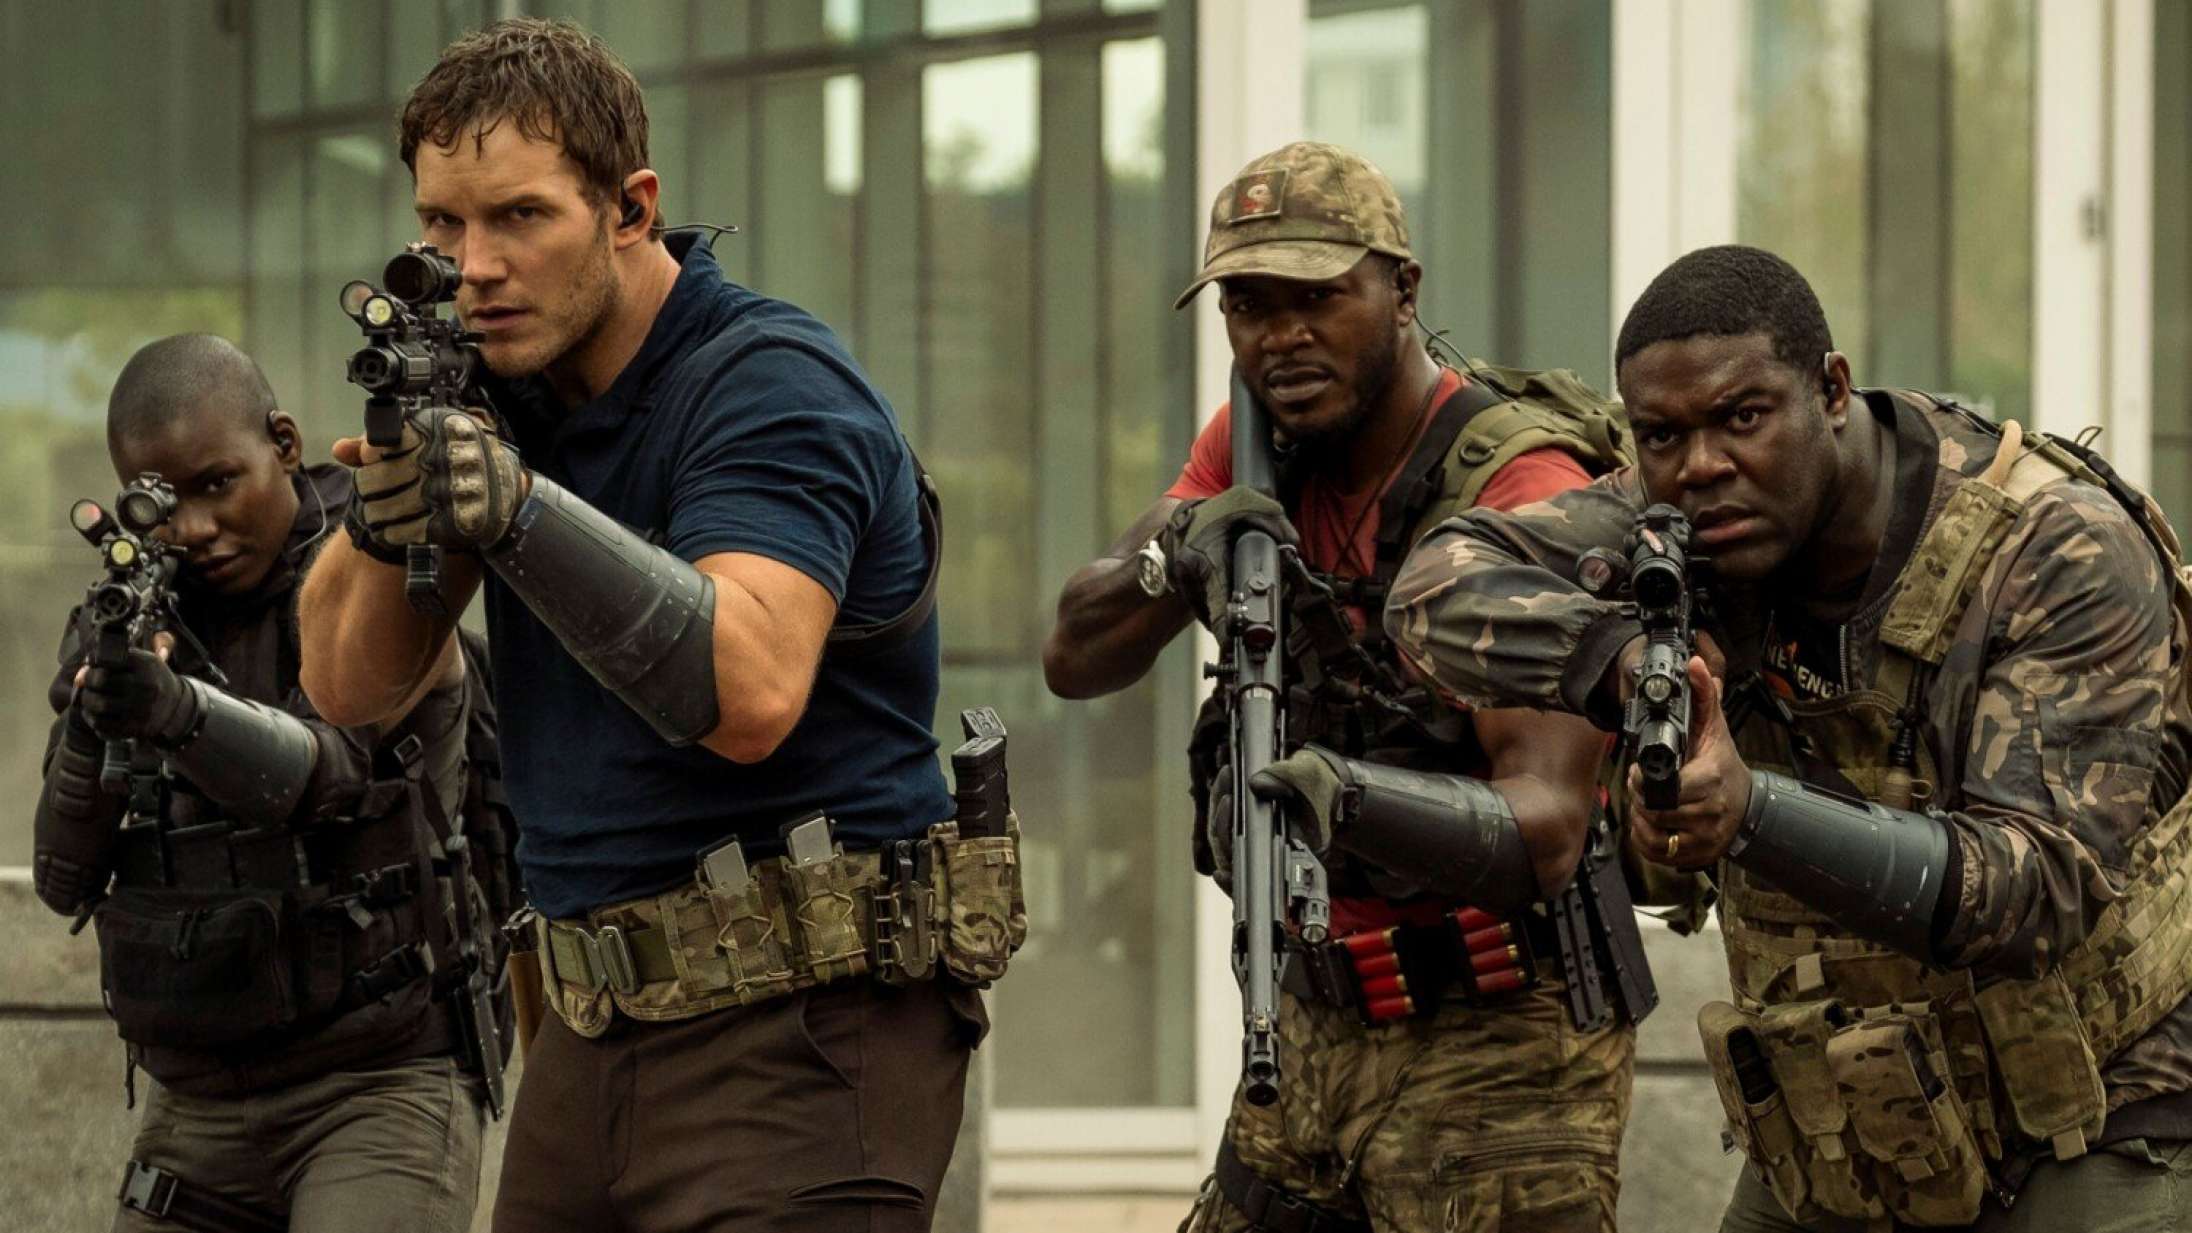 Chris Pratt rejser i tiden i Amazon Primes store sci-fi-satsning – se traileren til ‘The Tomorrow War’